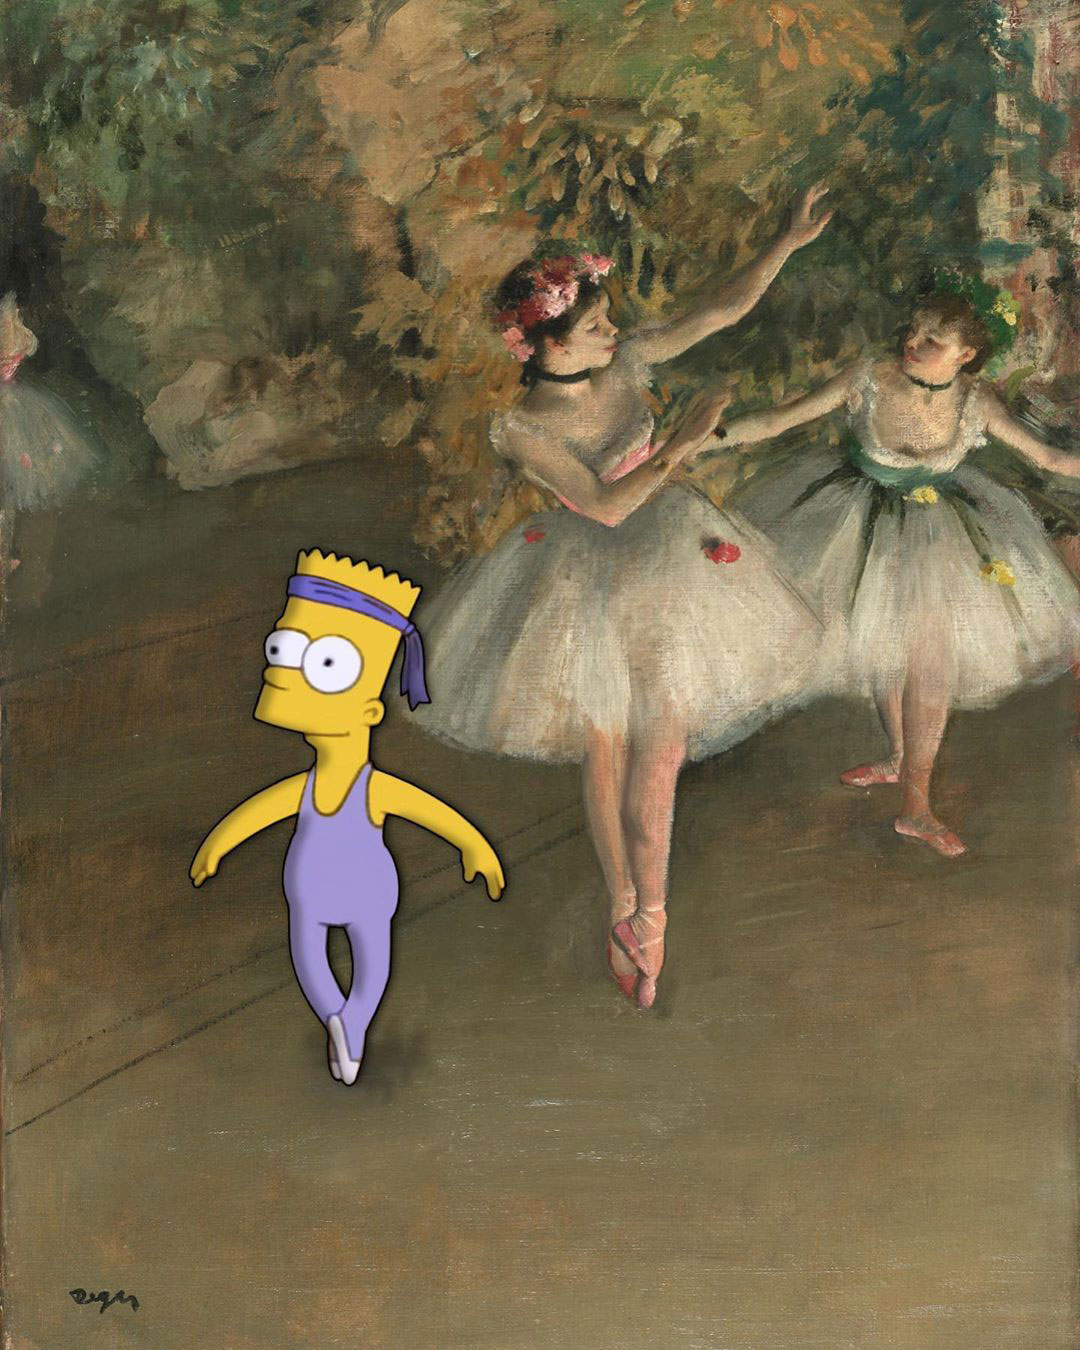 Fine Art Simpsons - Due ballerine in scena (Degas)